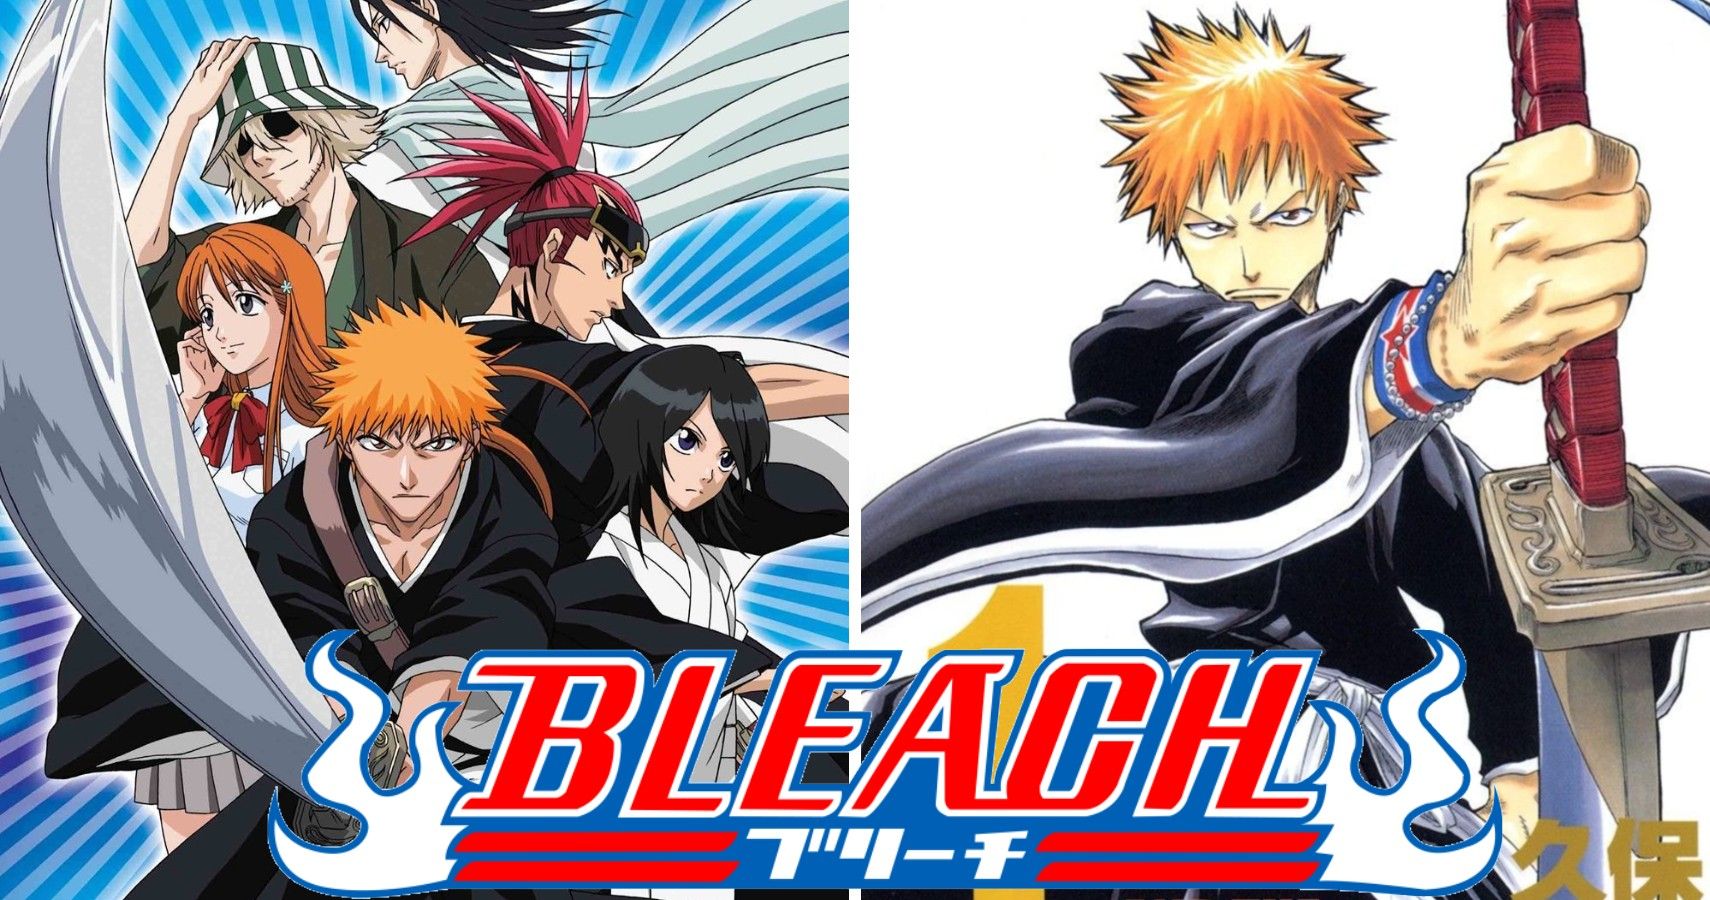 Why is the Bleach anime and manga called Bleach?